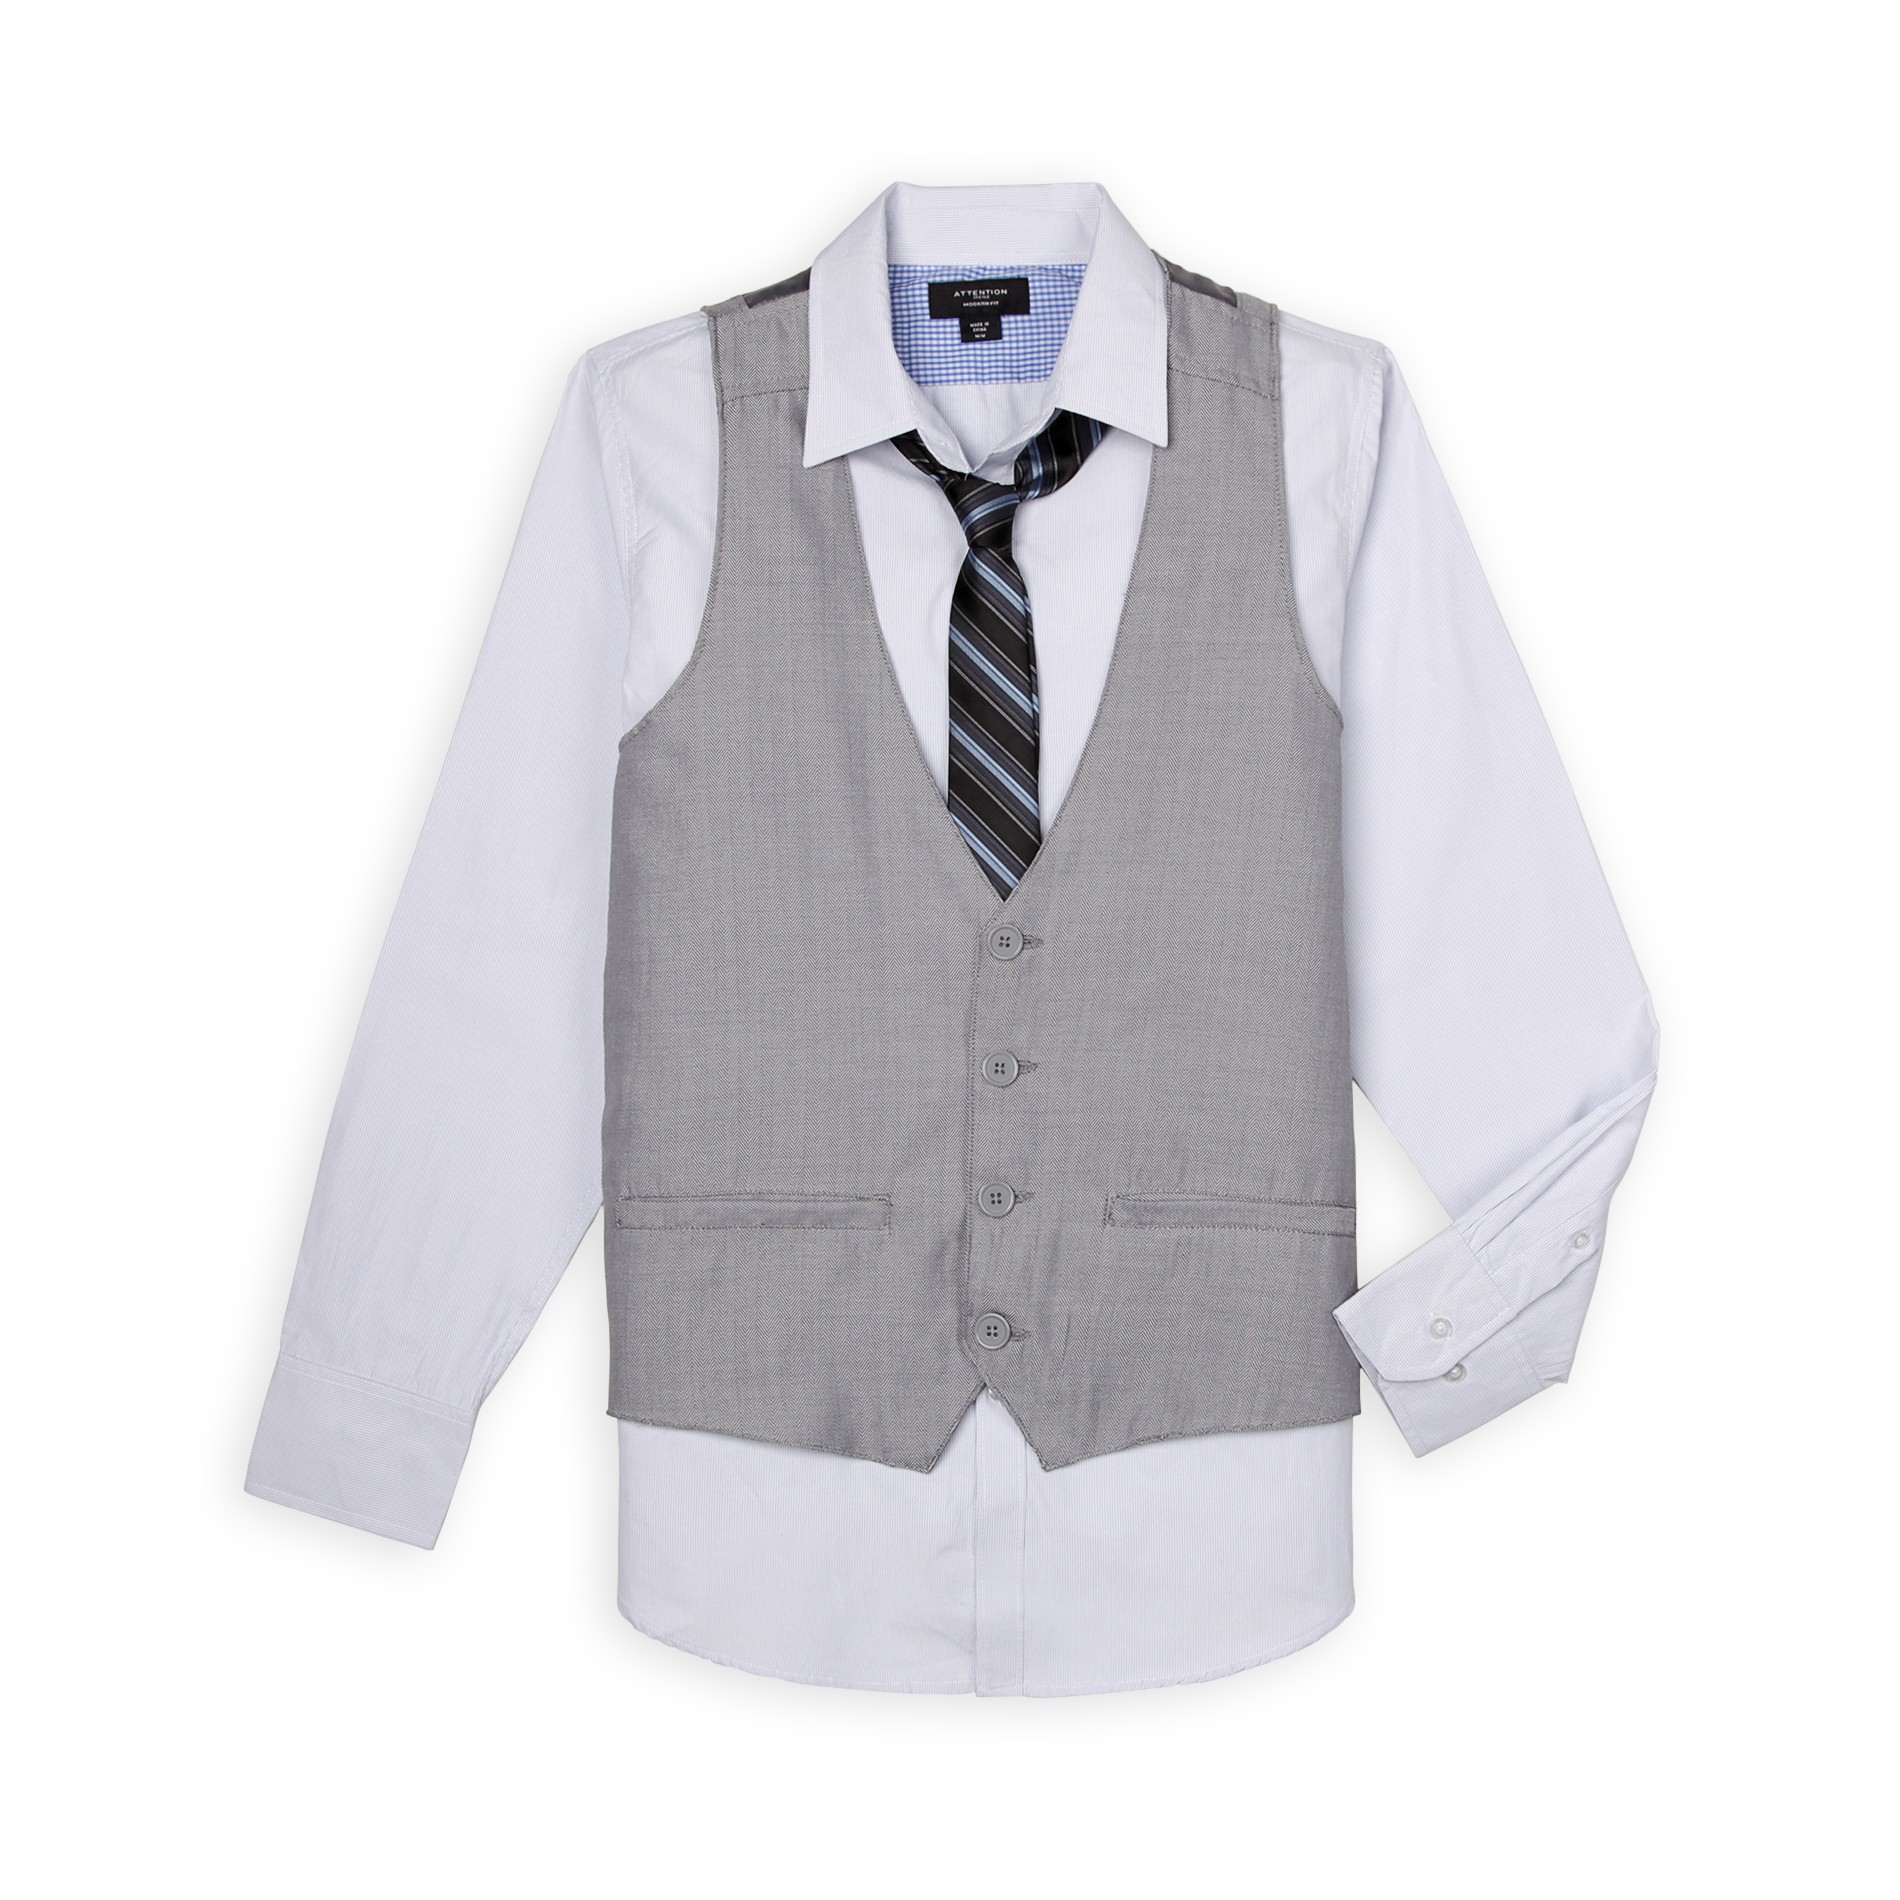 Attention Men's Dress Shirt  Vest  & Necktie - Striped